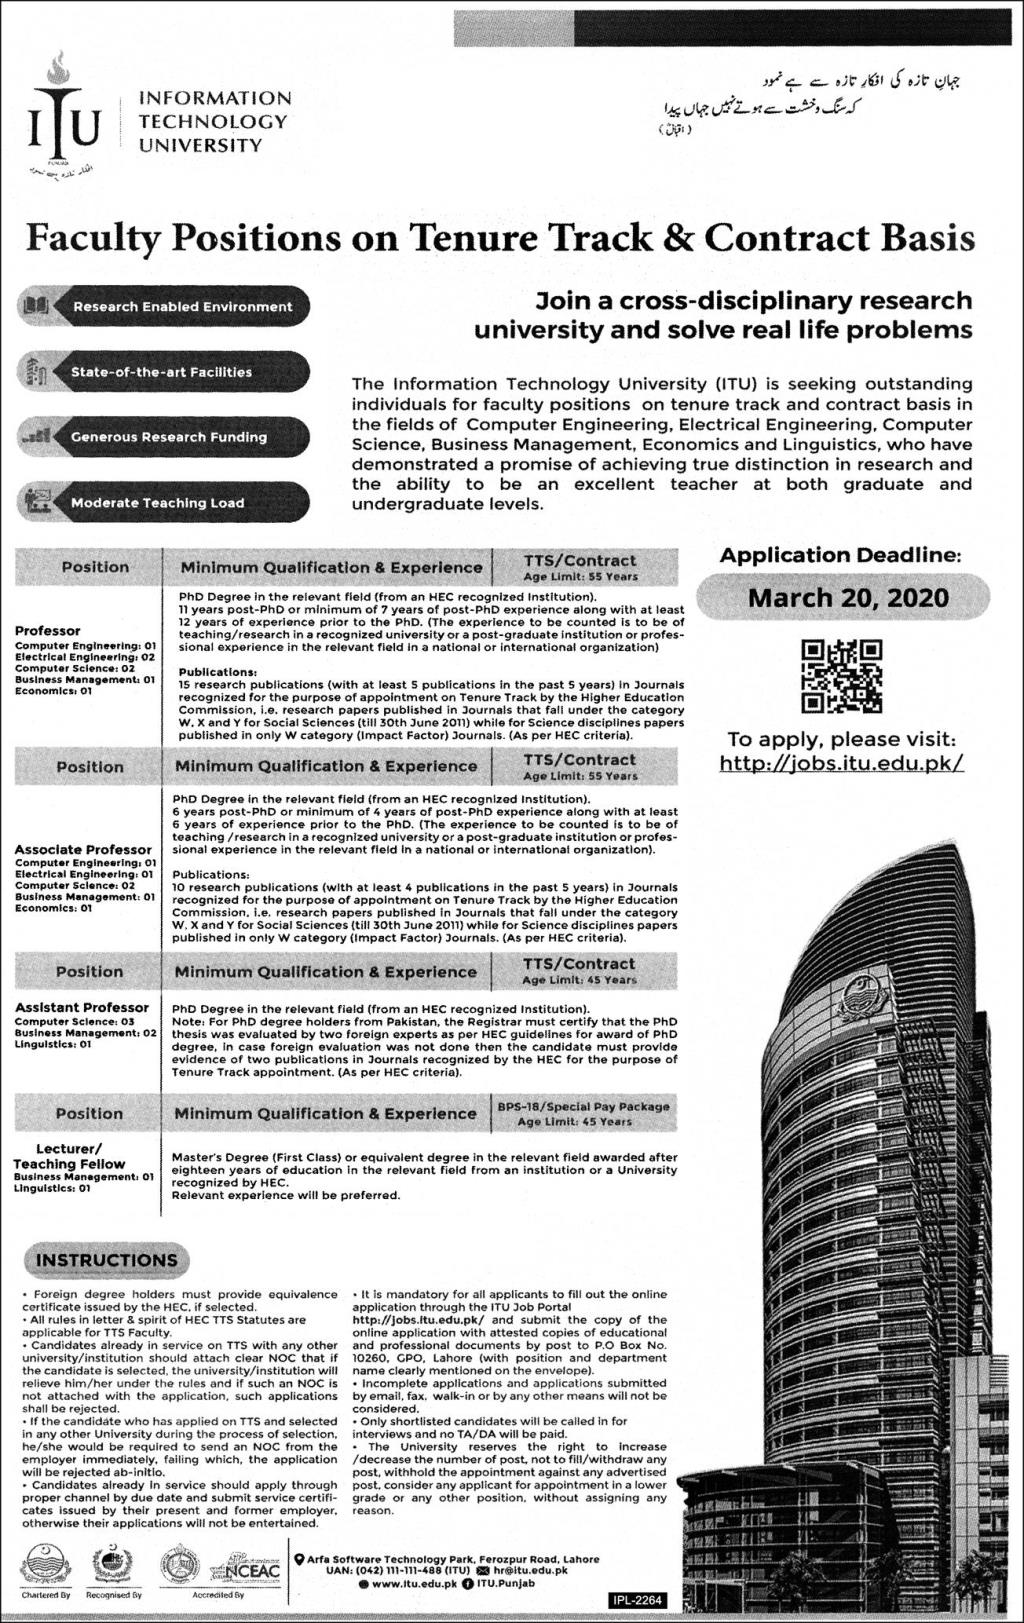 Information Technology University jobs